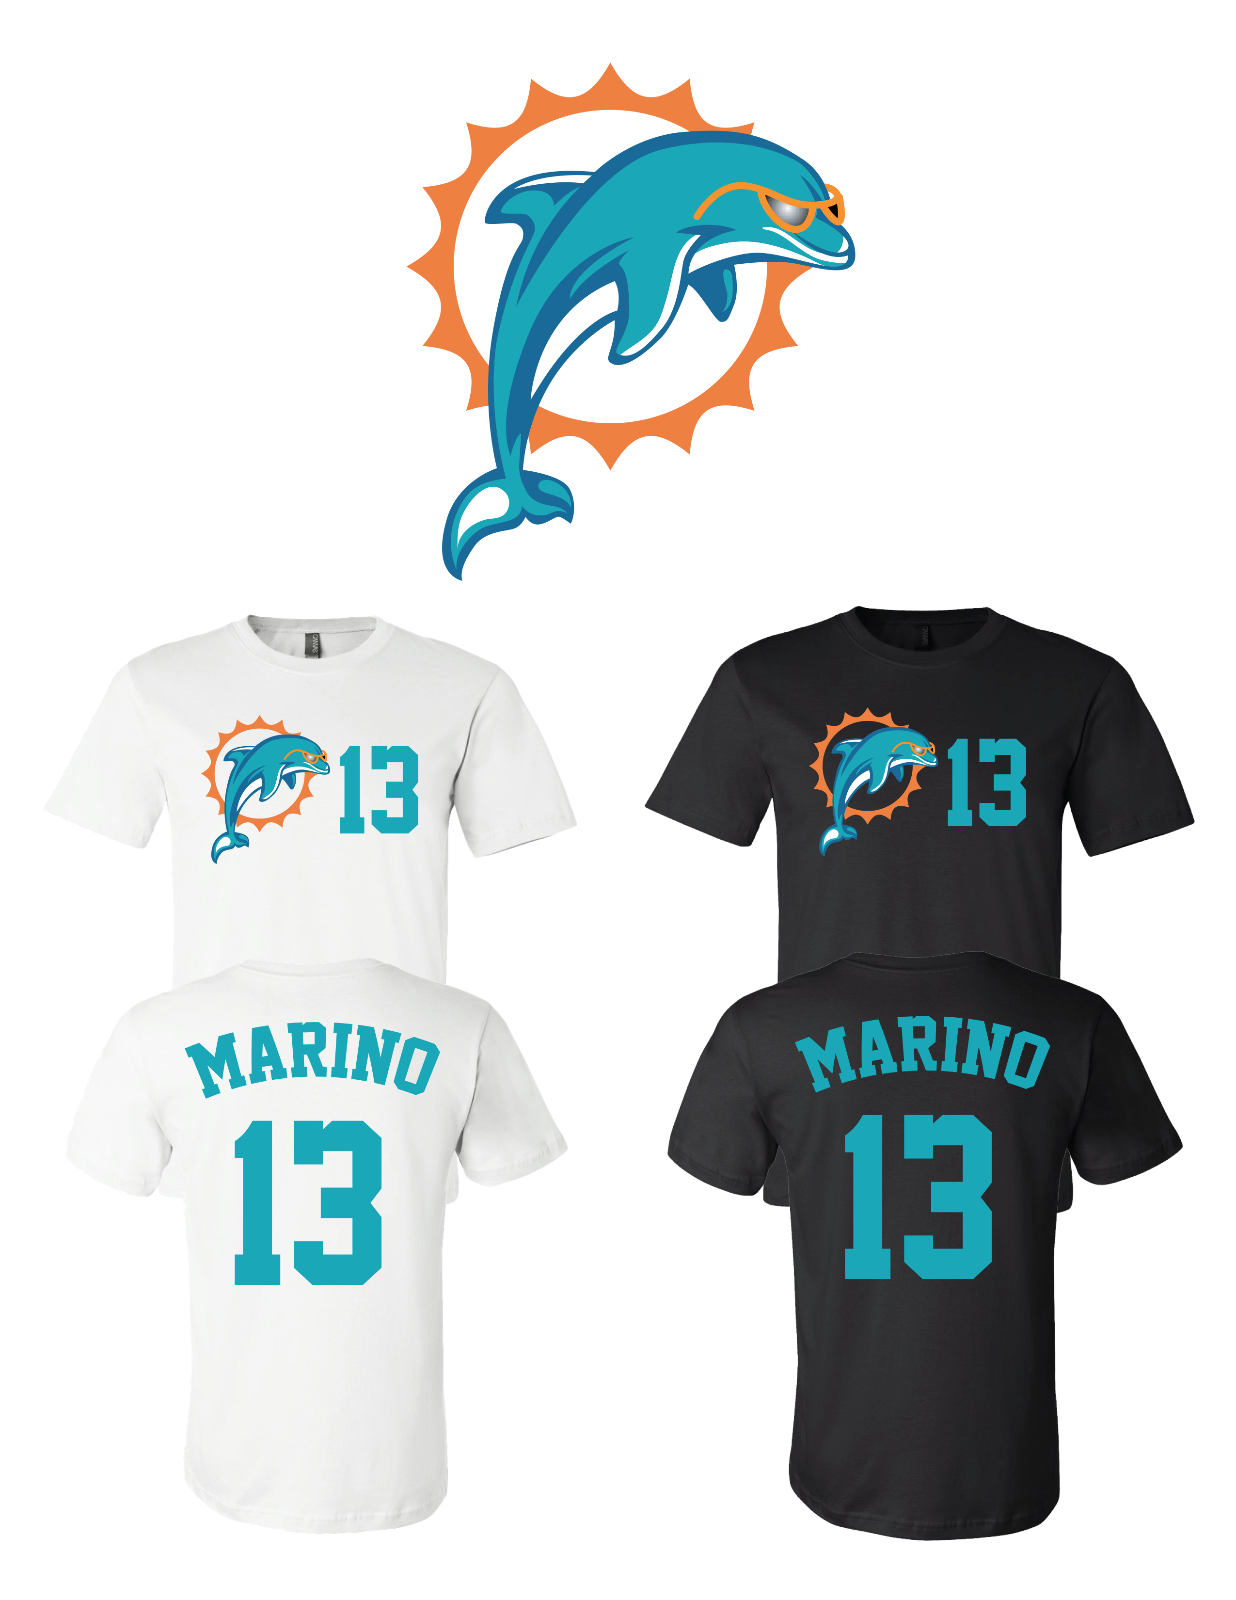 Dan Marino #13 Miami Dolphins Jersey player shirt